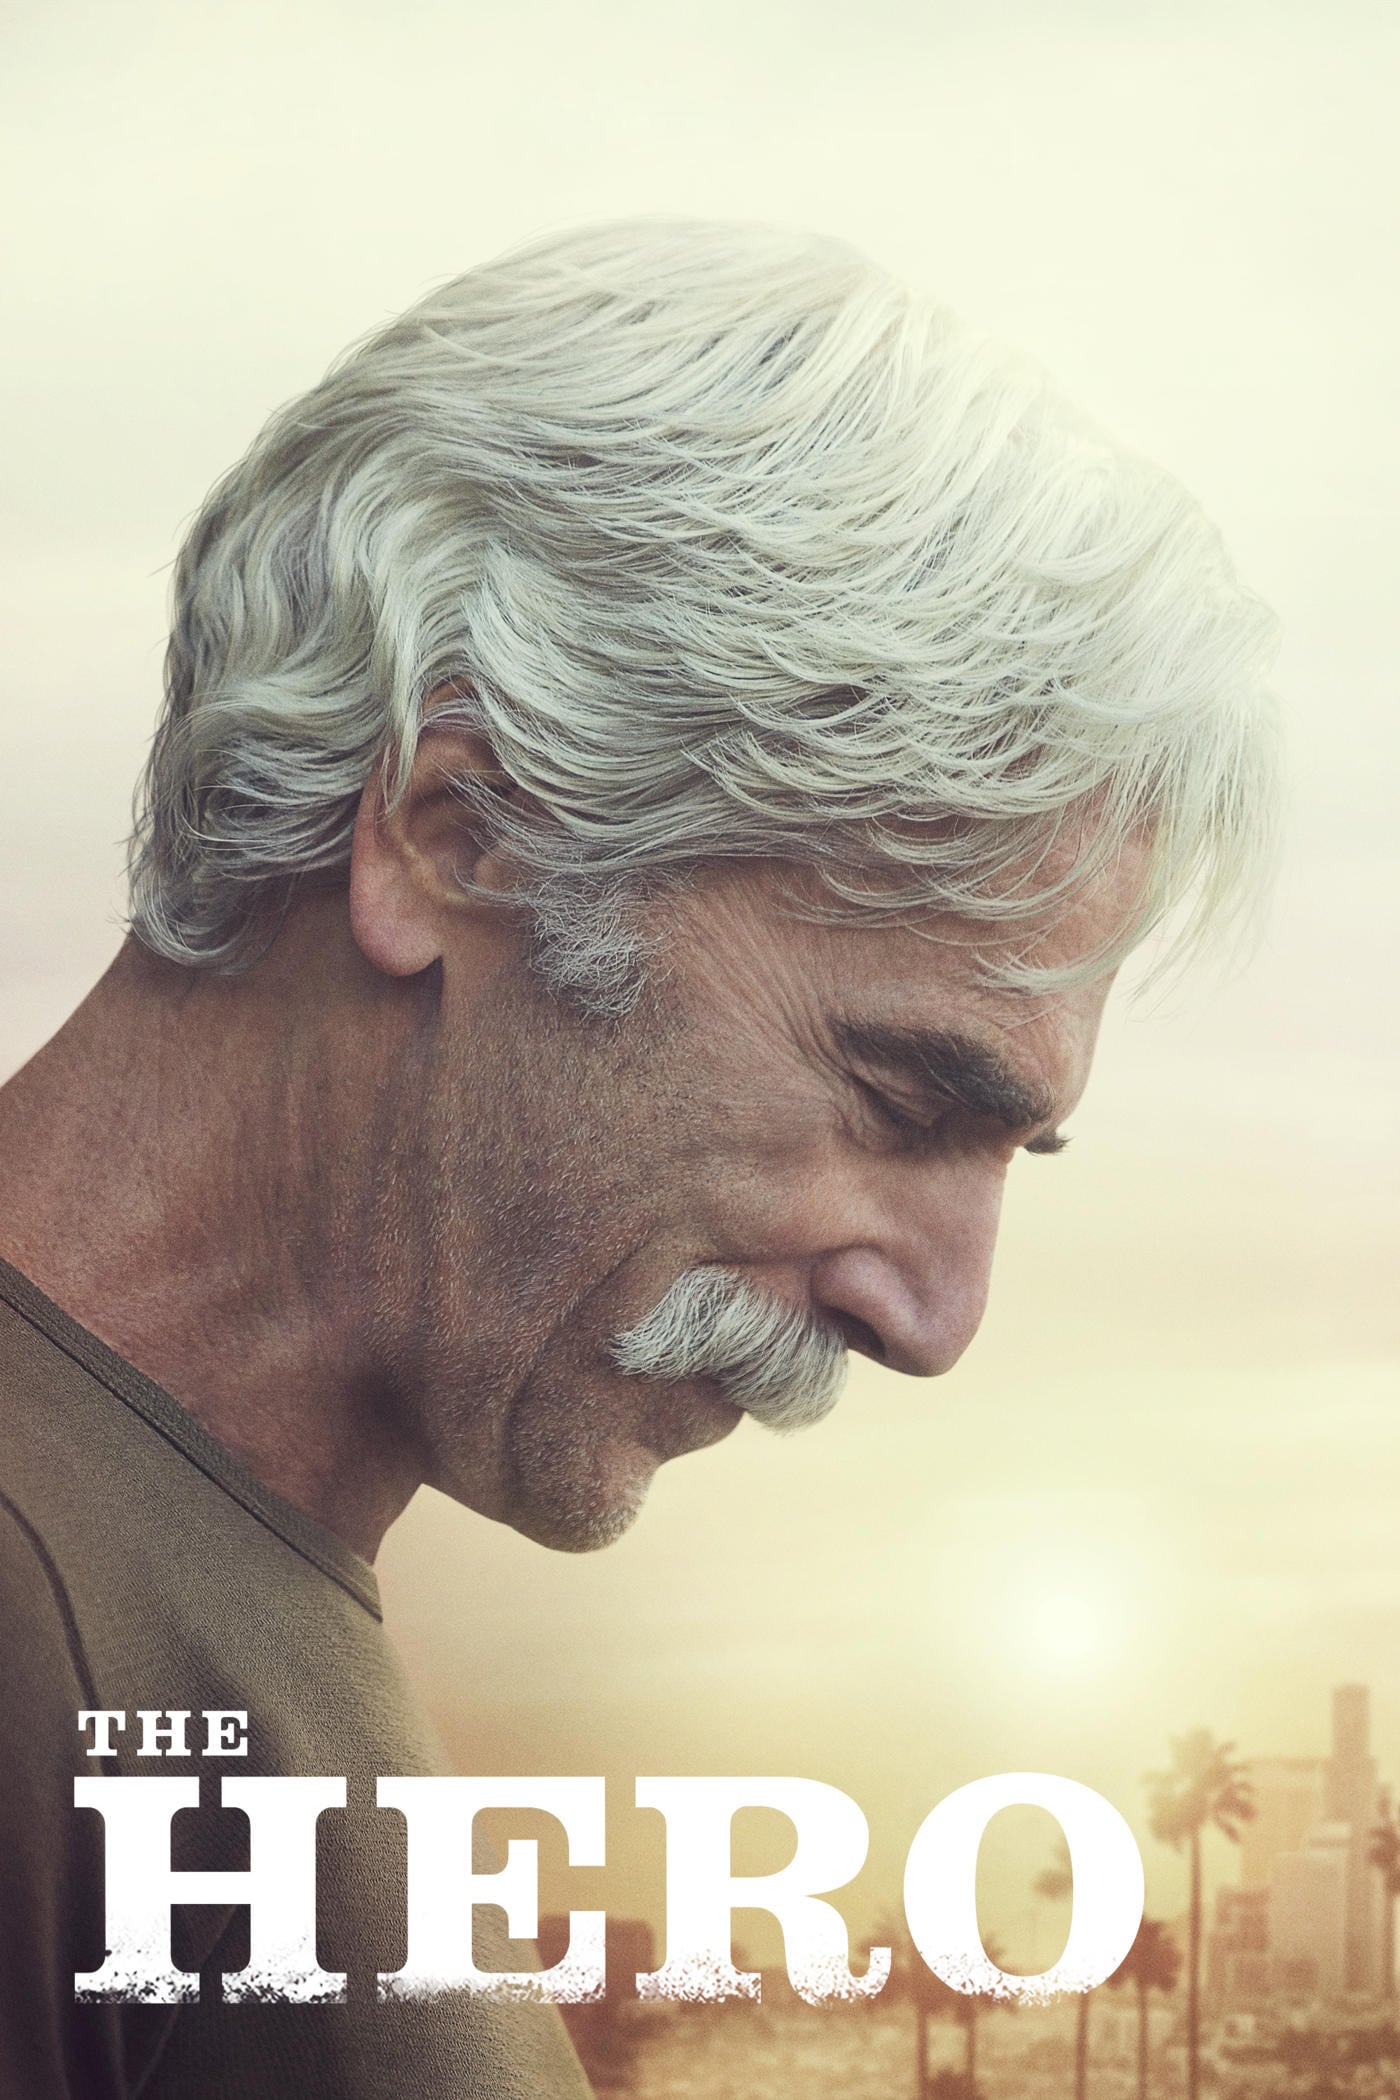 Affiche du film "The Hero"